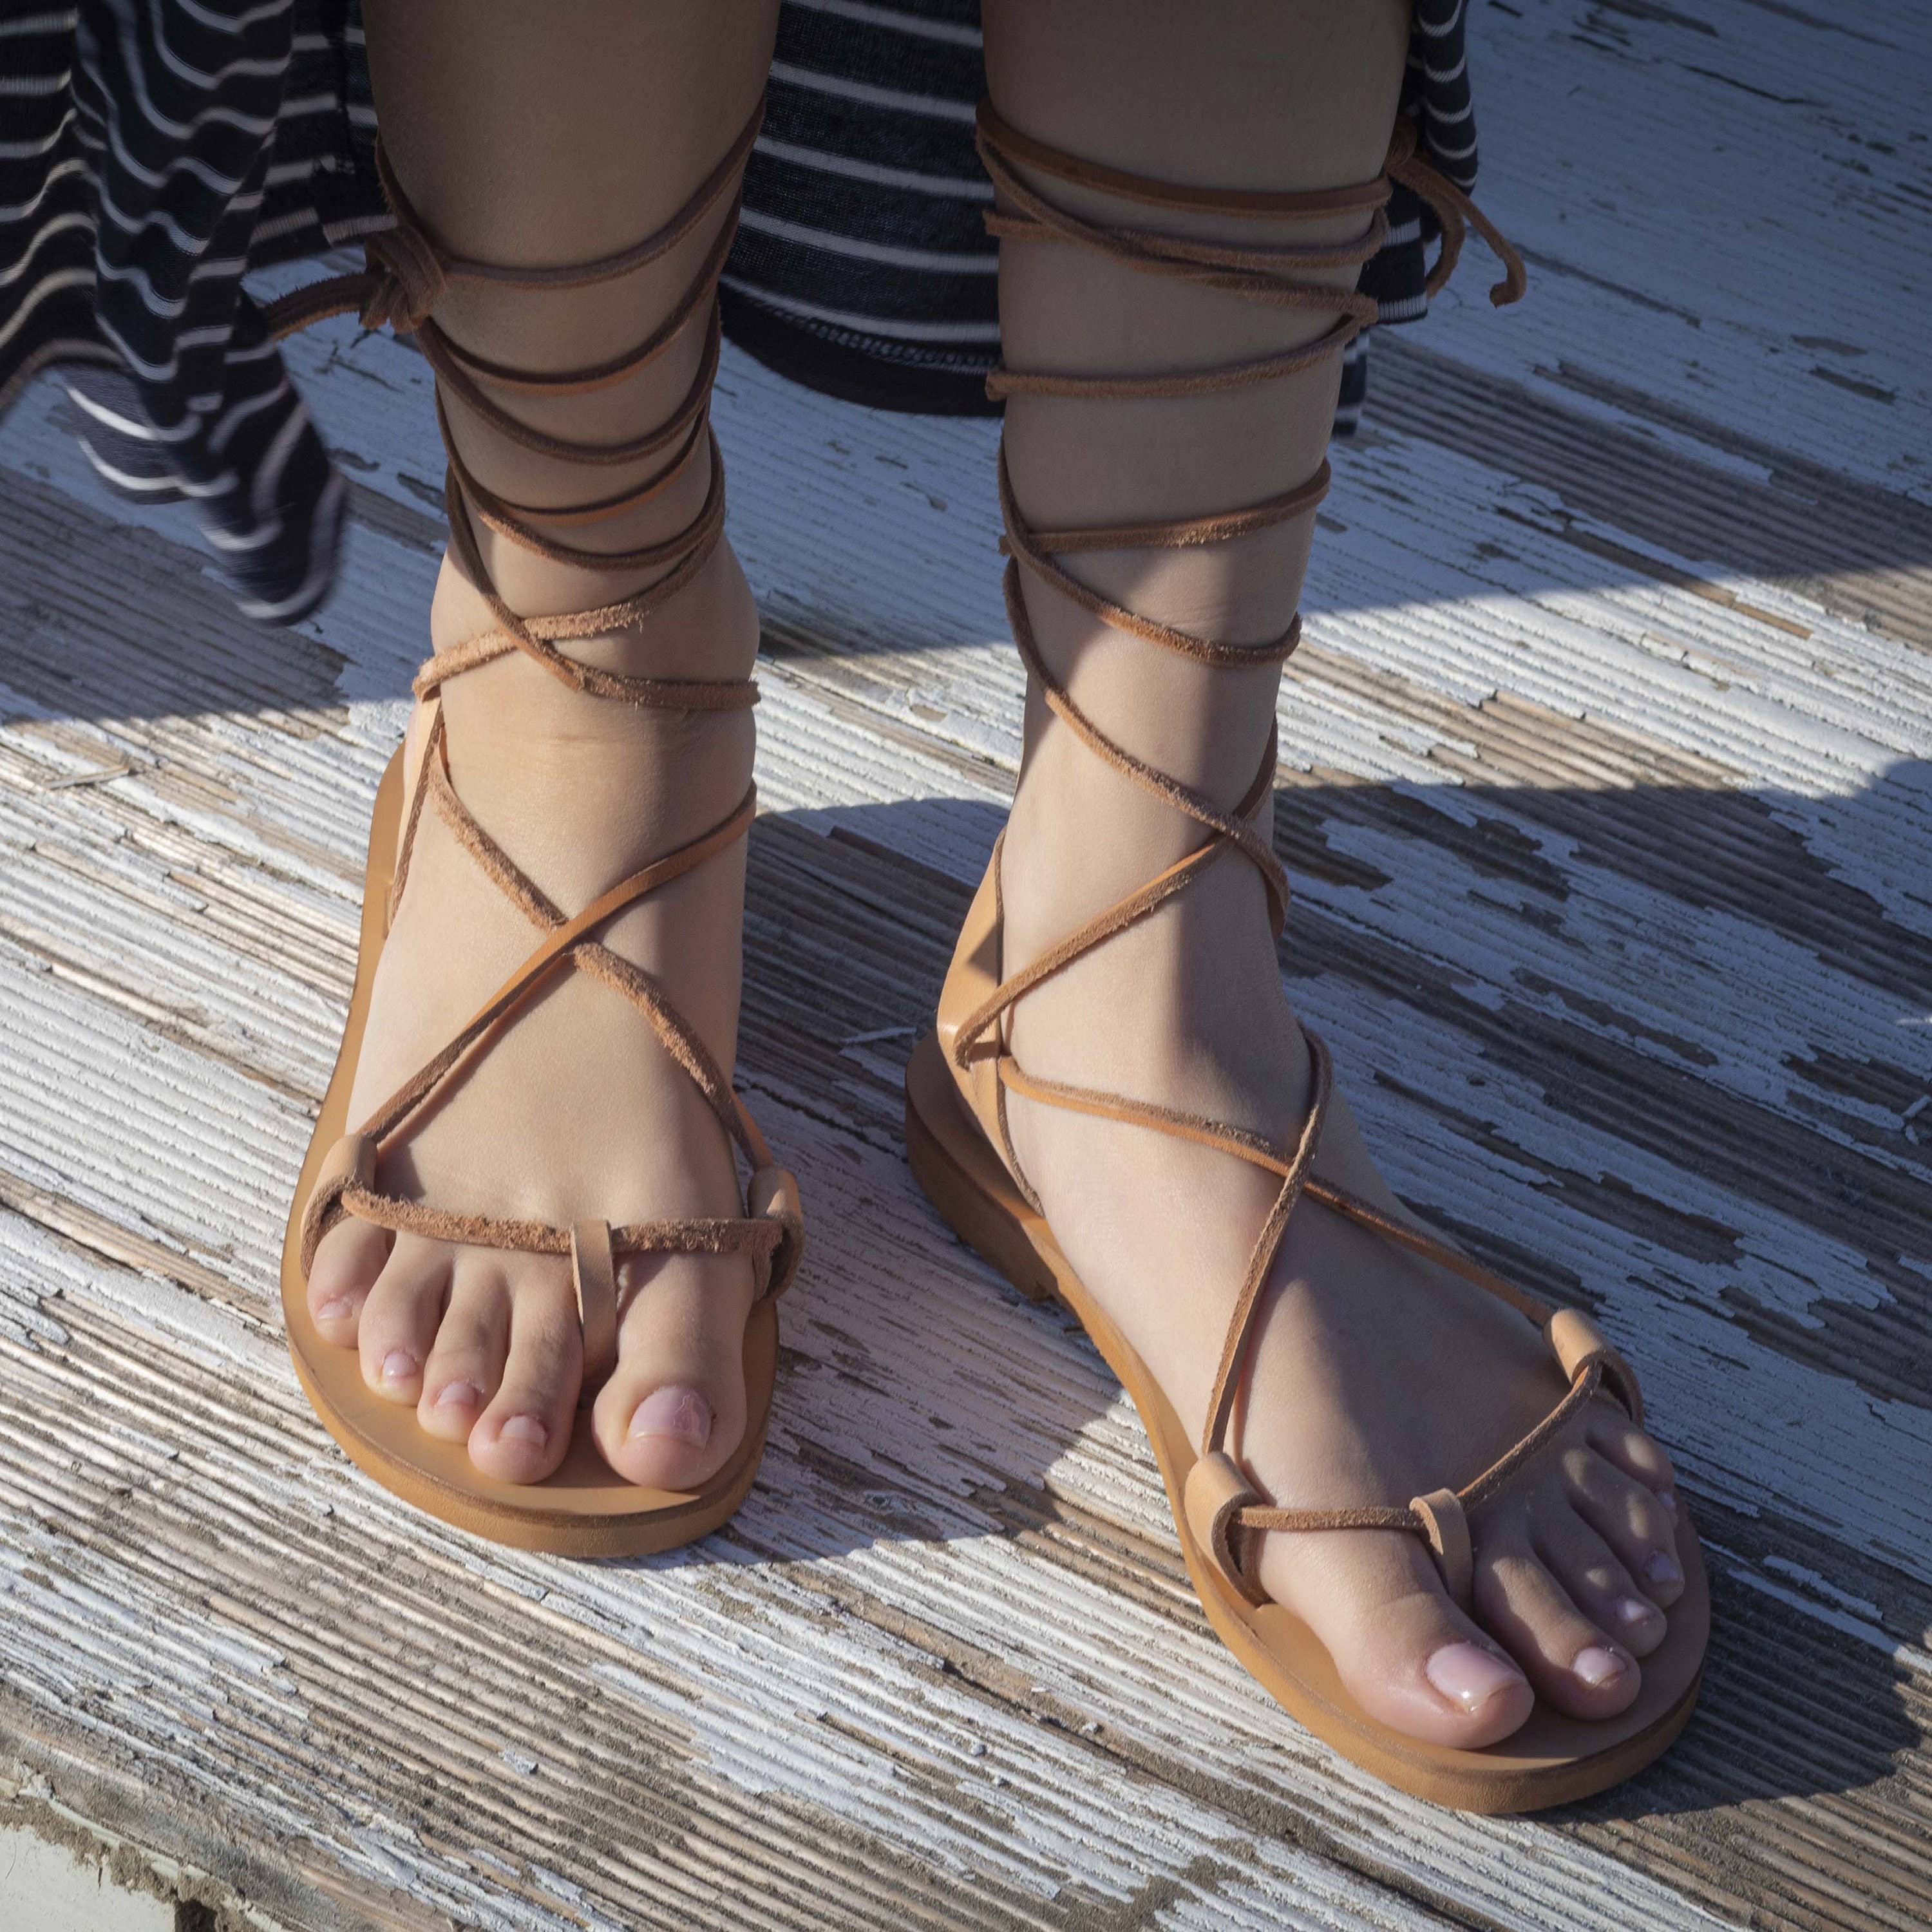 Sandalias griegas Sandalias deslizantes Sandalias griegas Sandalias de cuero para mujer Sandalias de cuero verano Zapatos Zapatos para mujer Sandalias Sandalias de anillo de punta Sandalias de tiras 